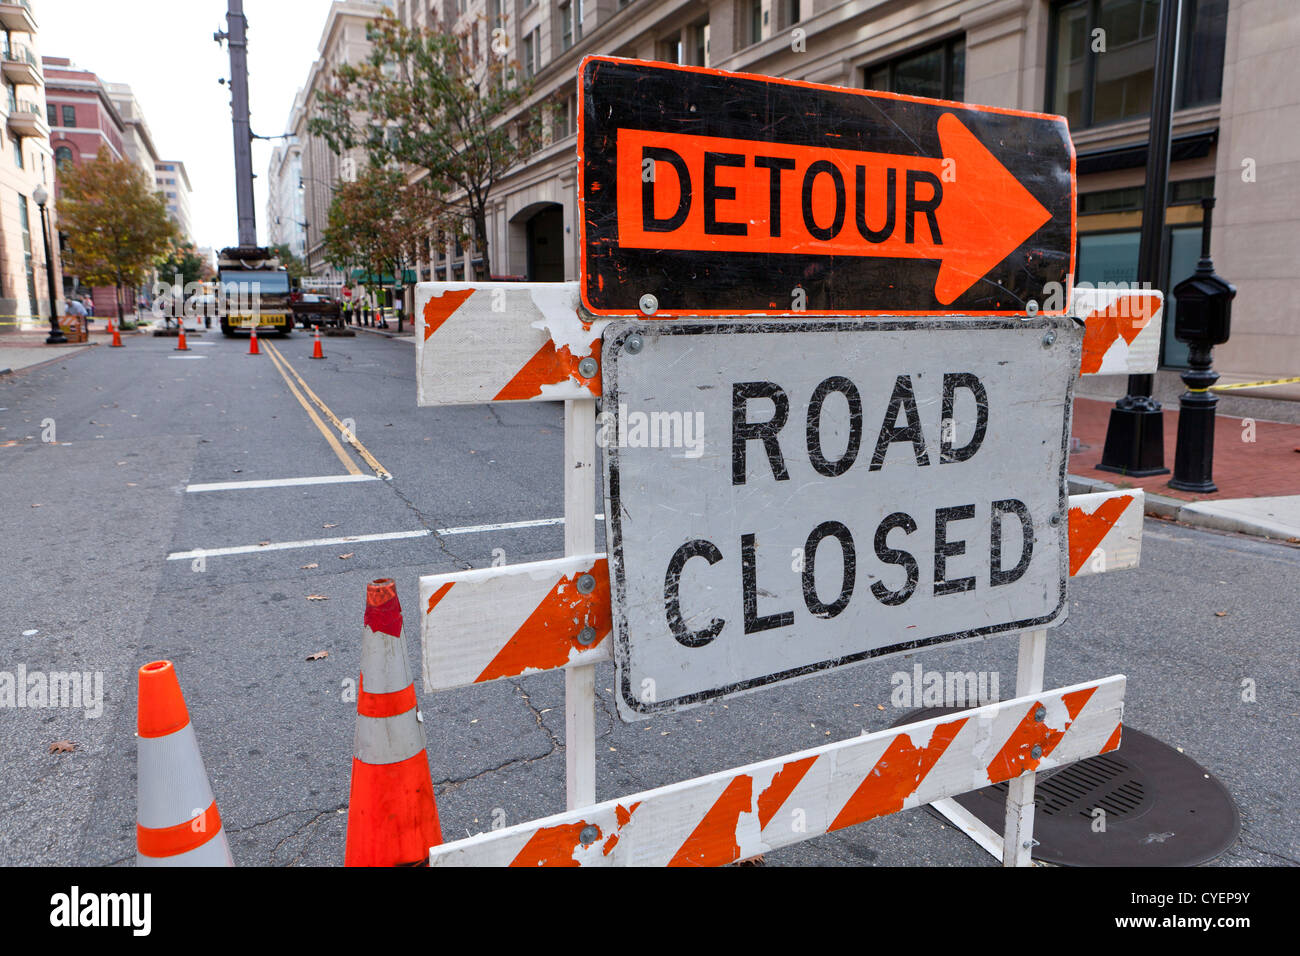 Road closed / detour sign - USA Stock Photo